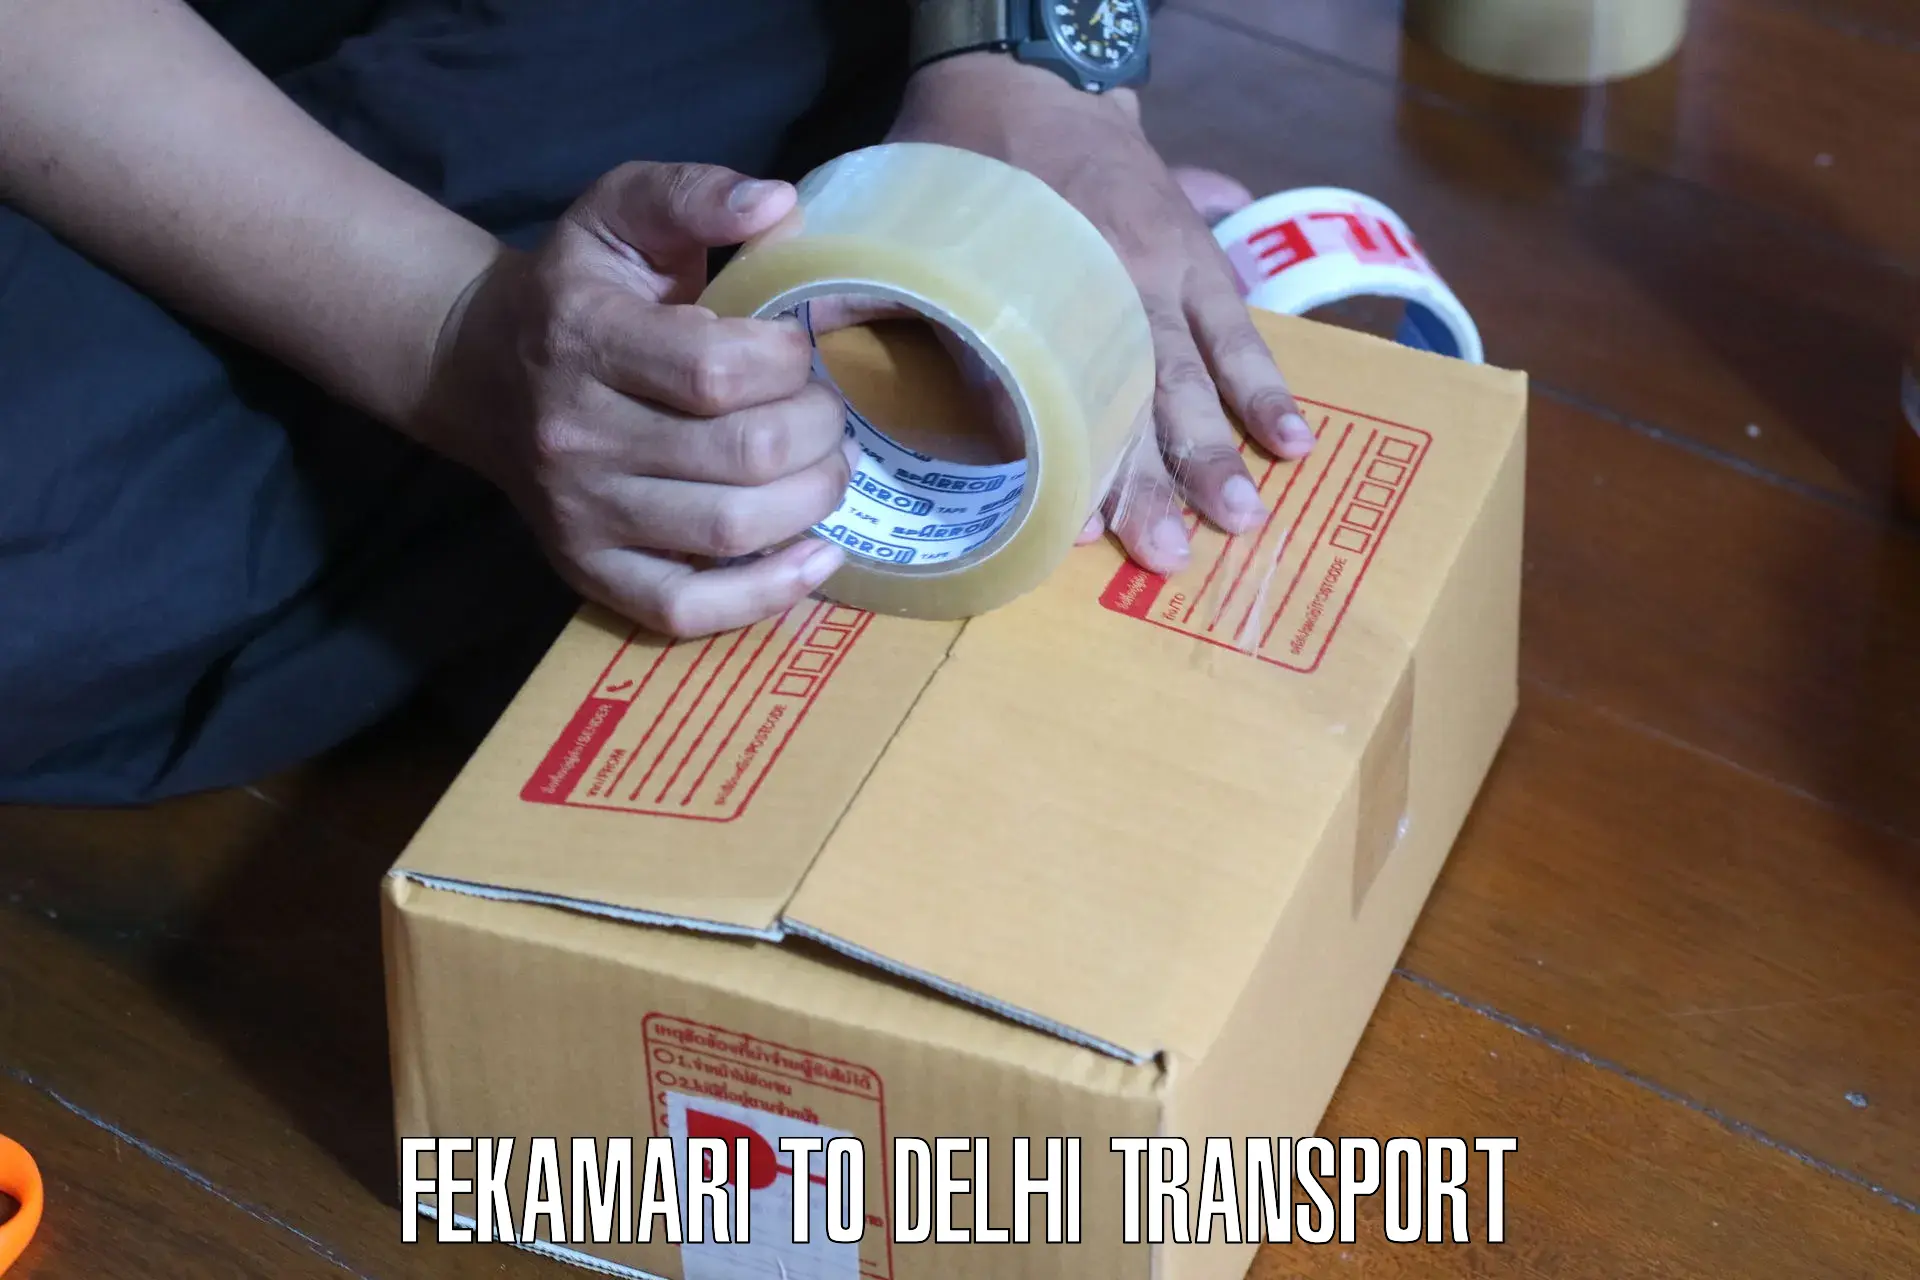 Pick up transport service Fekamari to University of Delhi